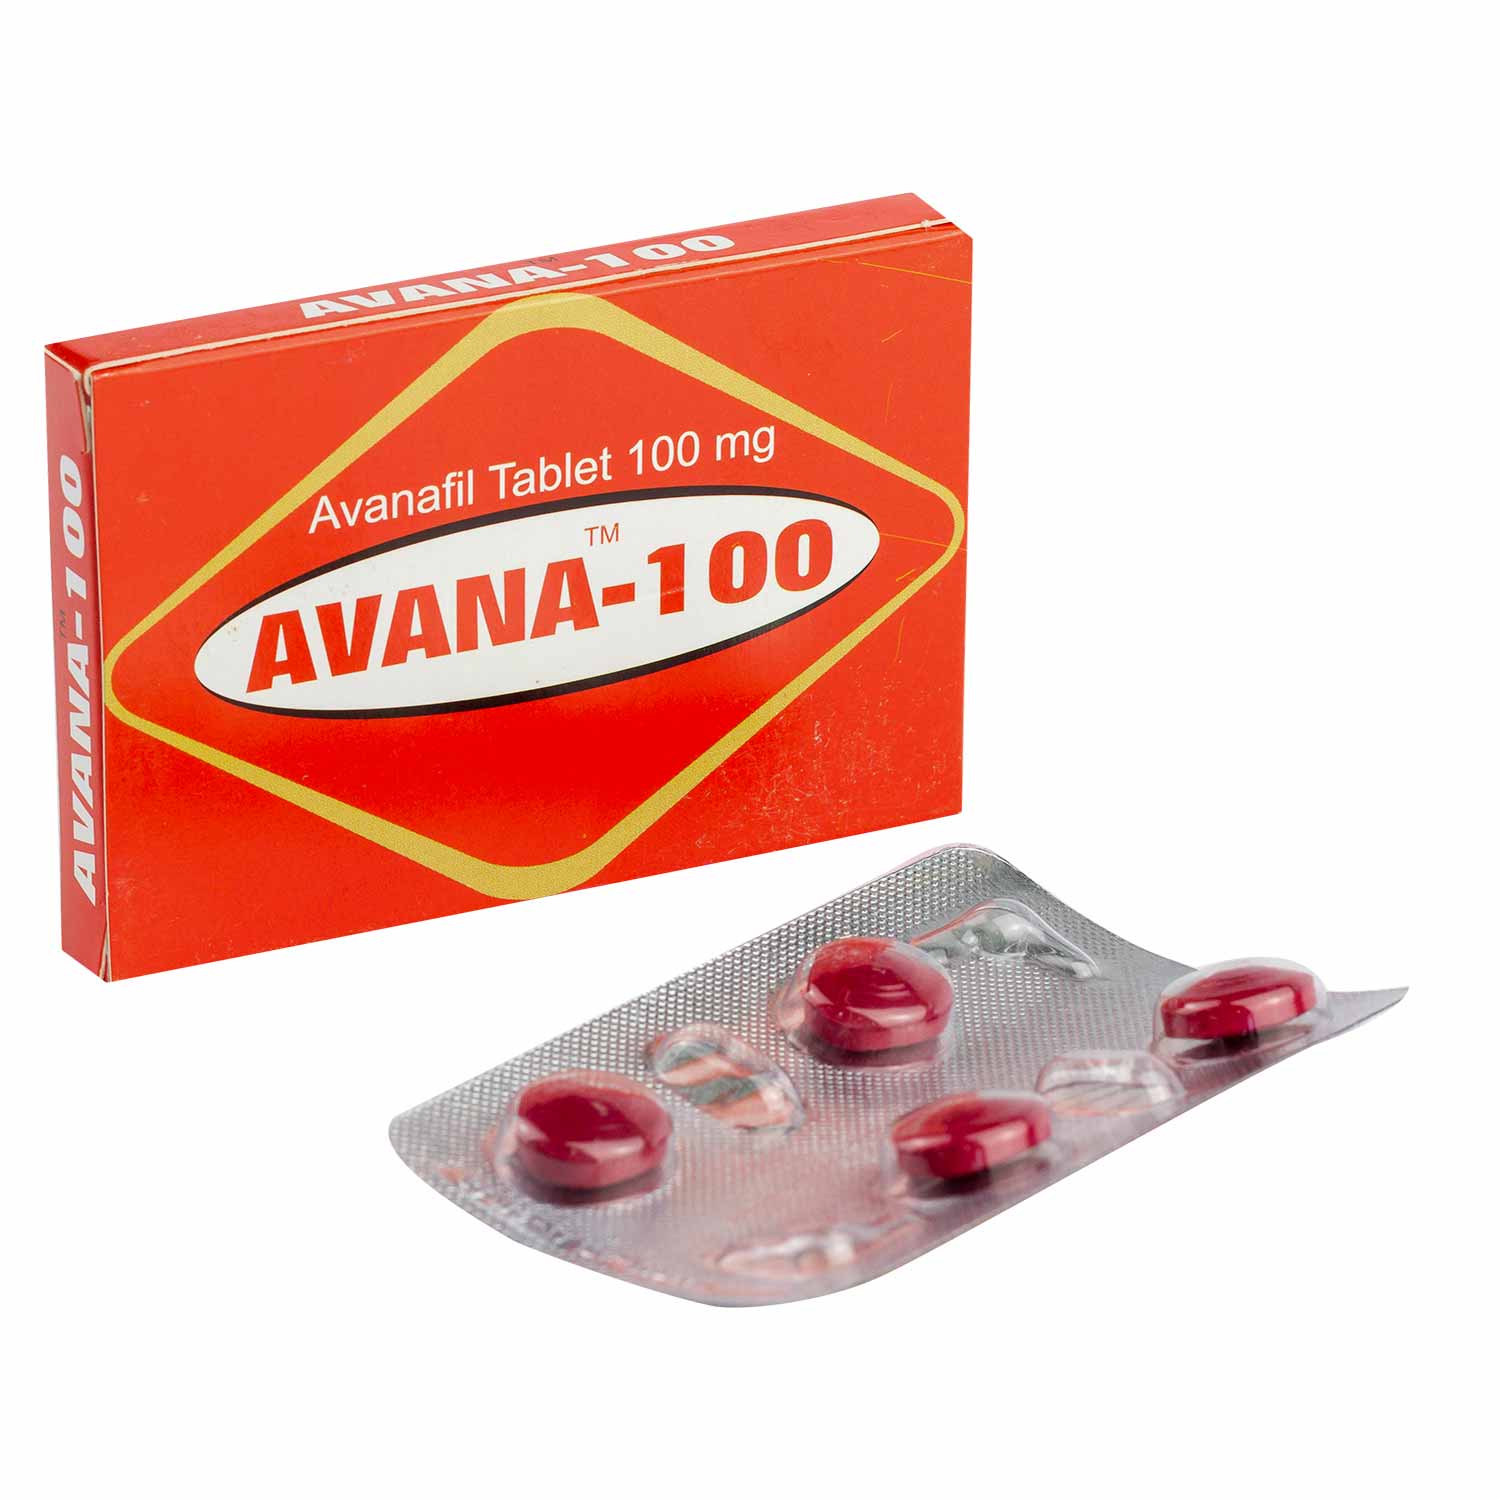 Avana. Avana 100. Аванафил 100 мг. Avana 100mg. Дженерик super Avana.